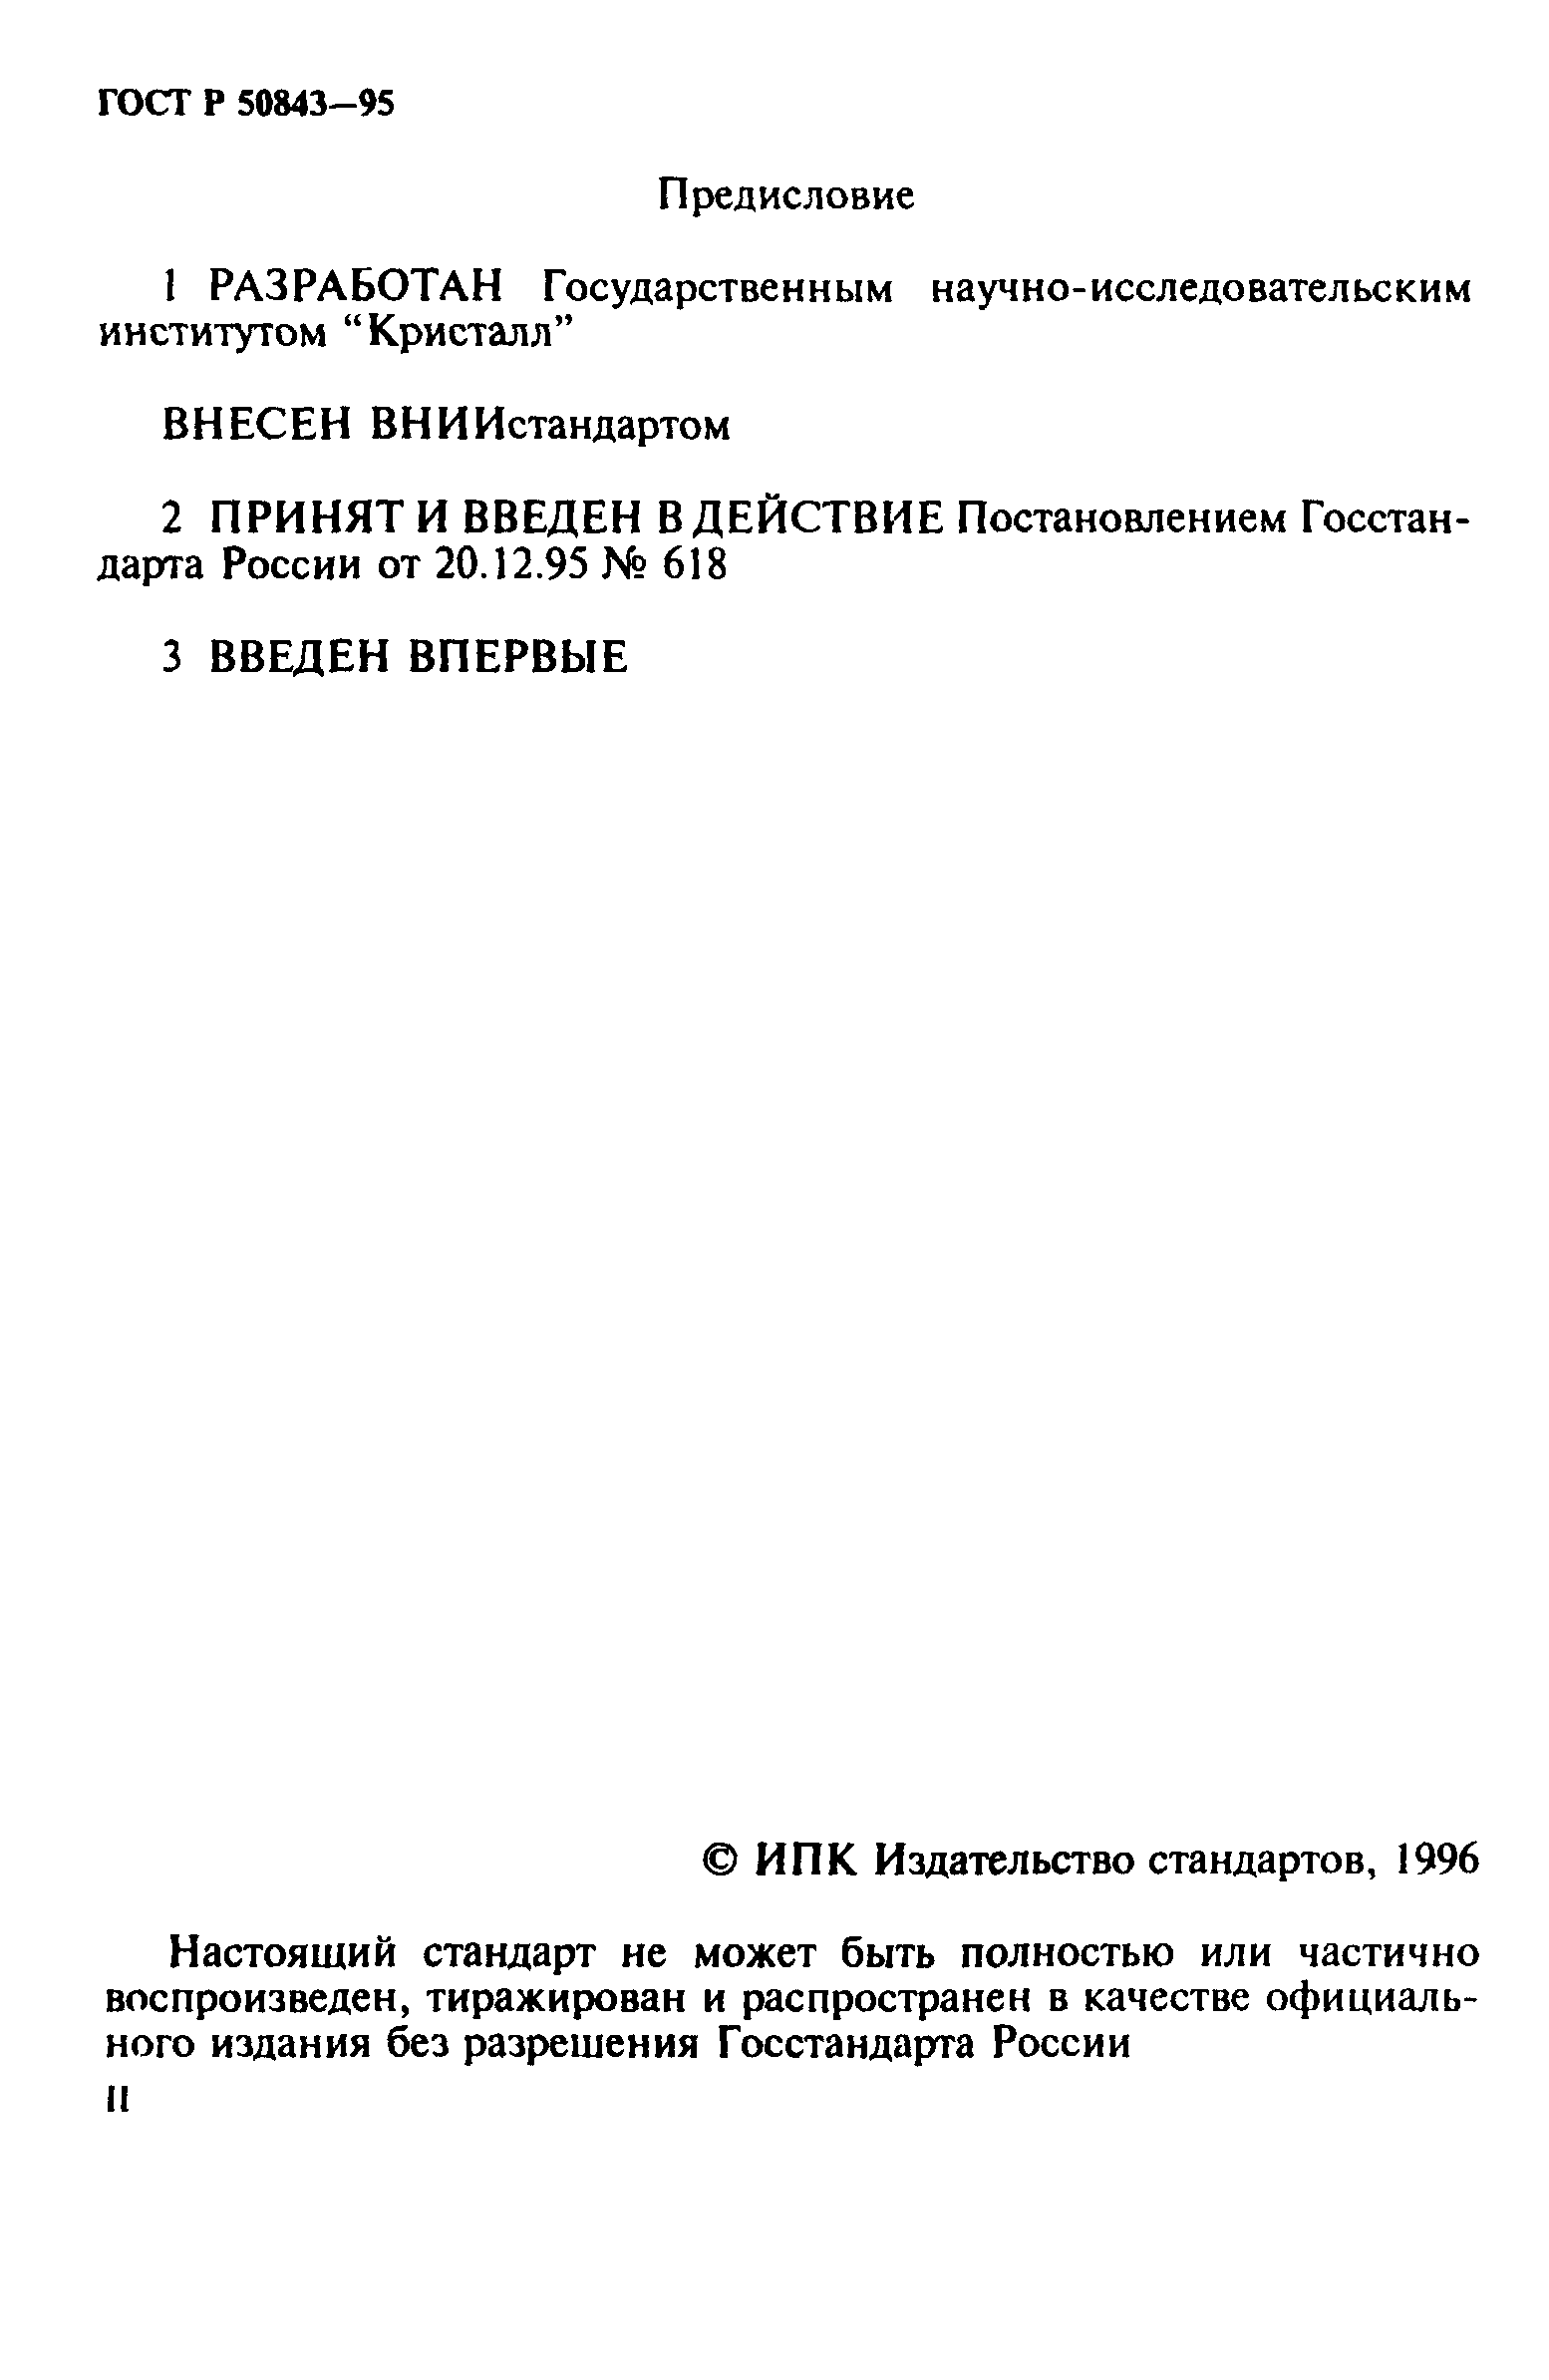 ГОСТ Р 50843-95